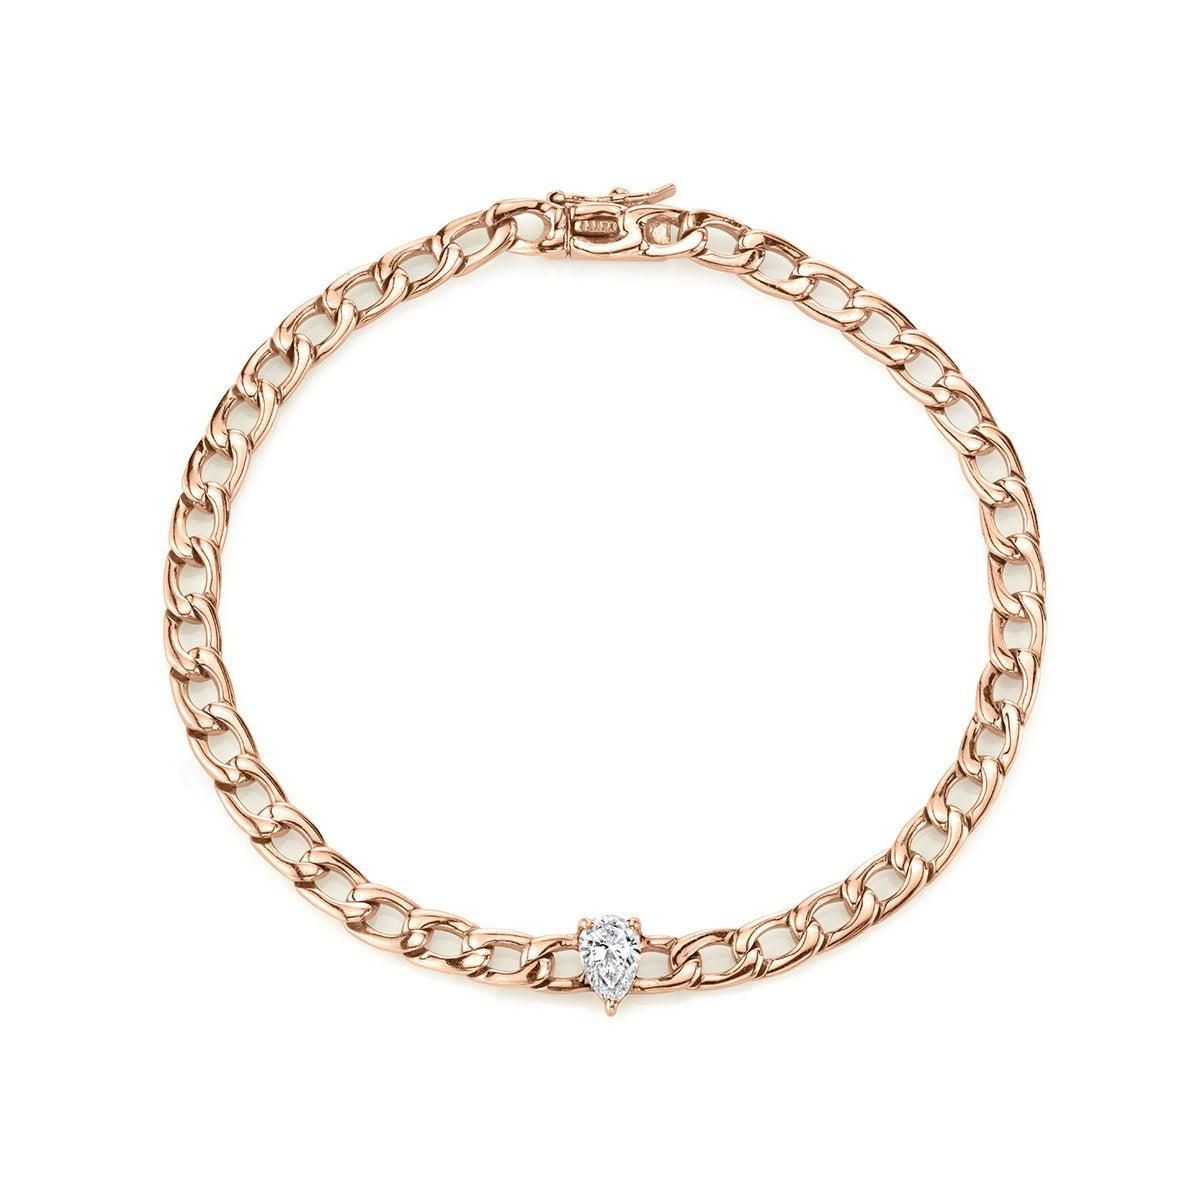 Plain Chain Bracelet with Pear Diamond Center